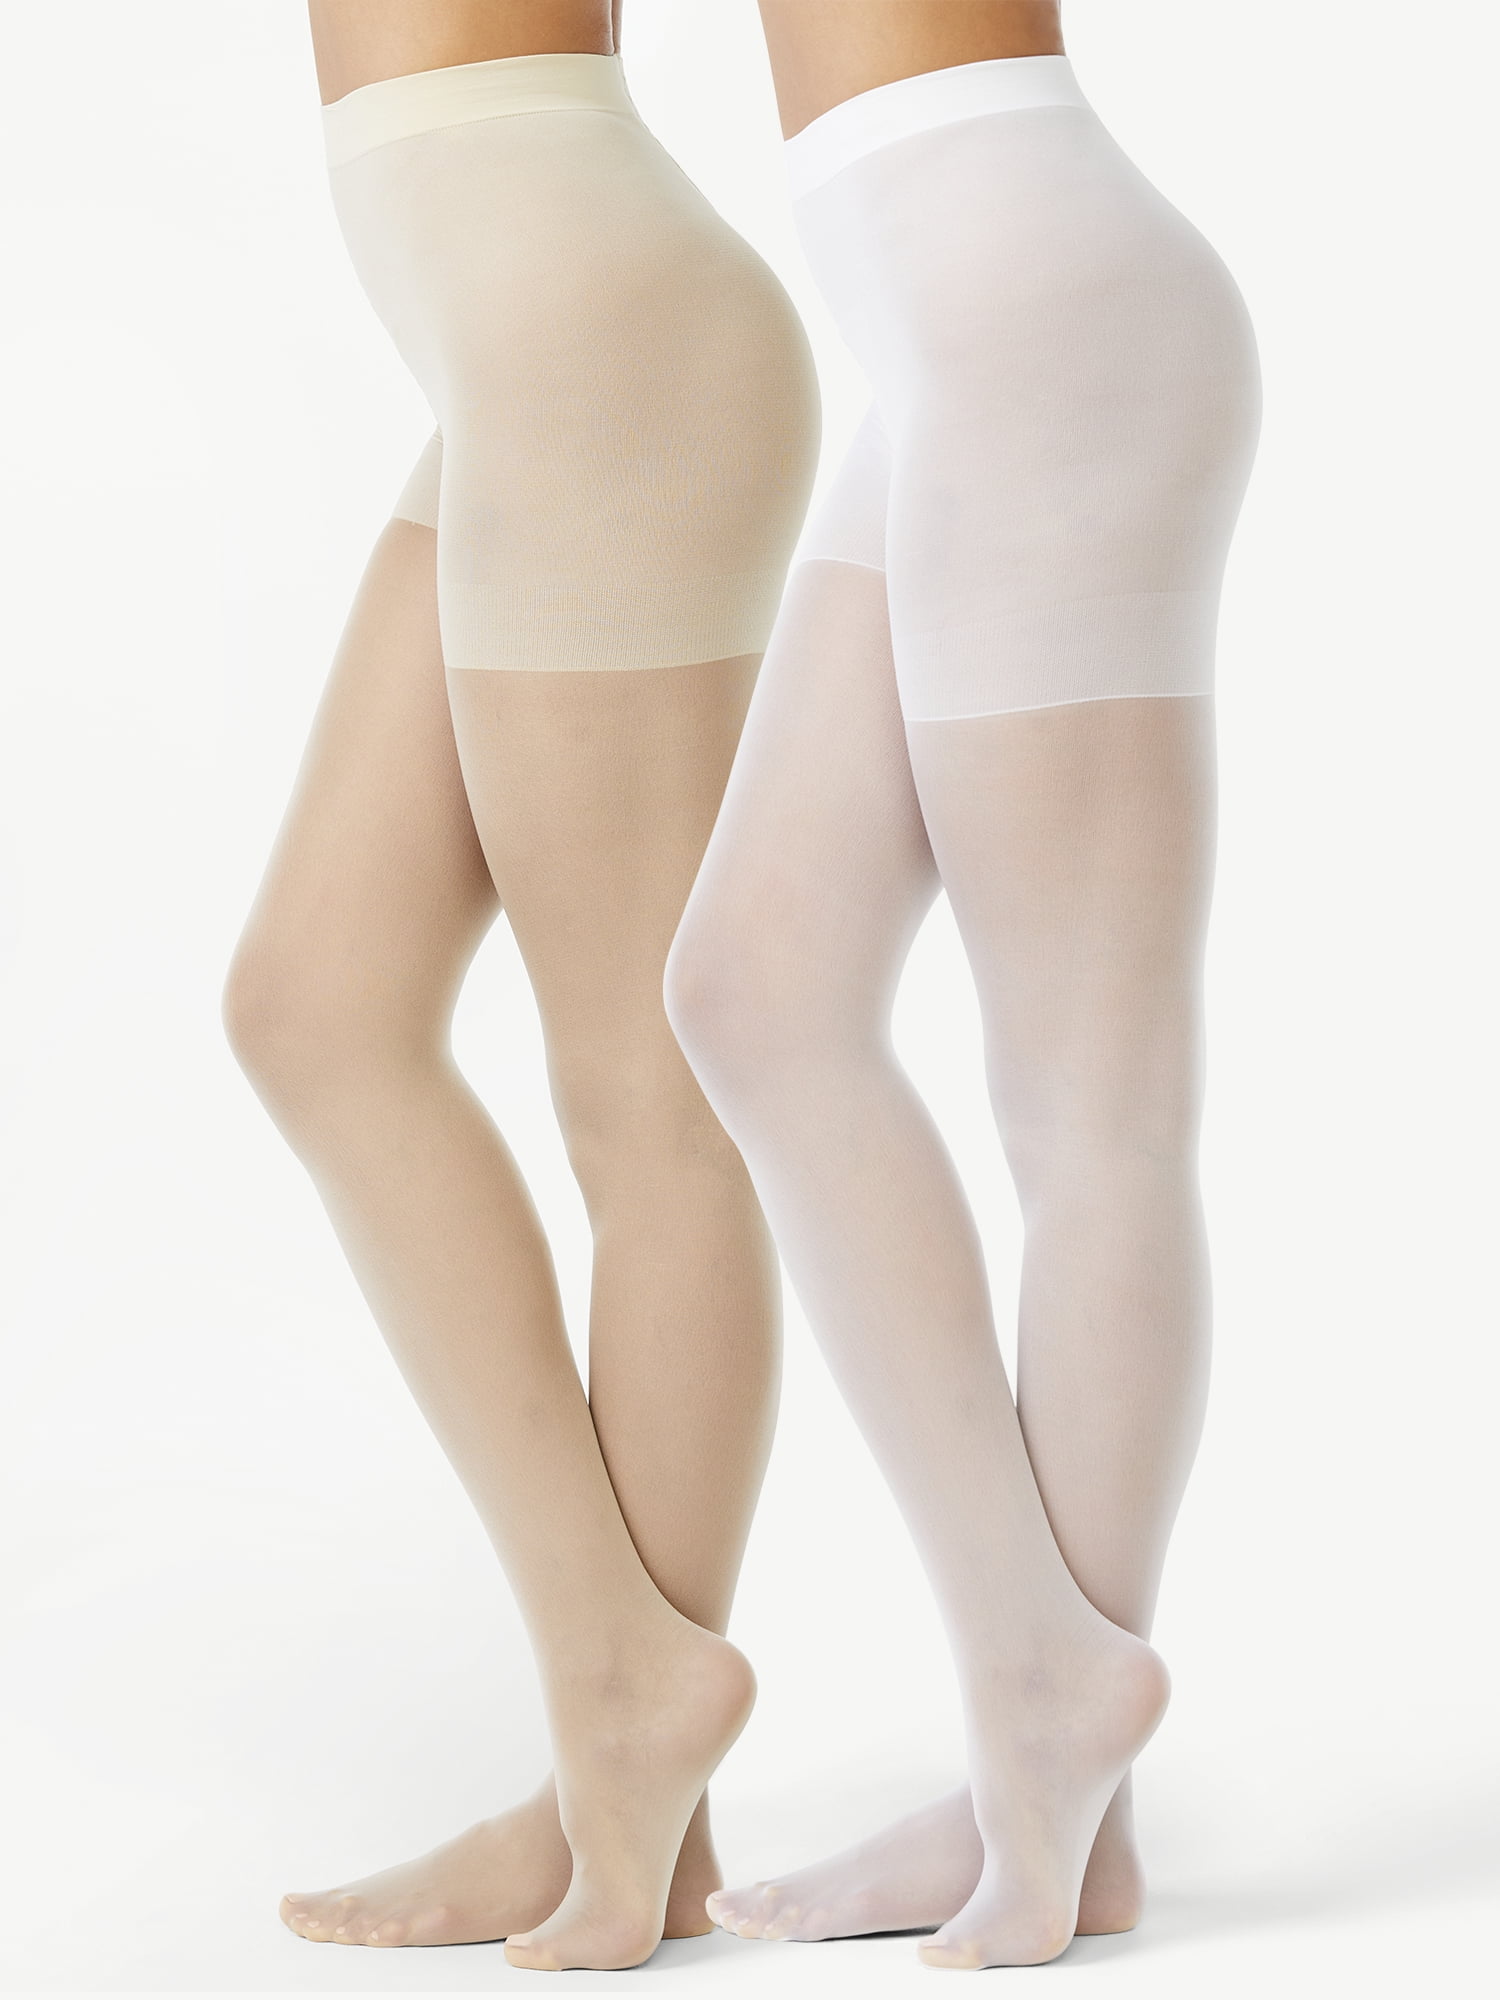 Stockings GATTA white over seamless black pantyhose panties tights